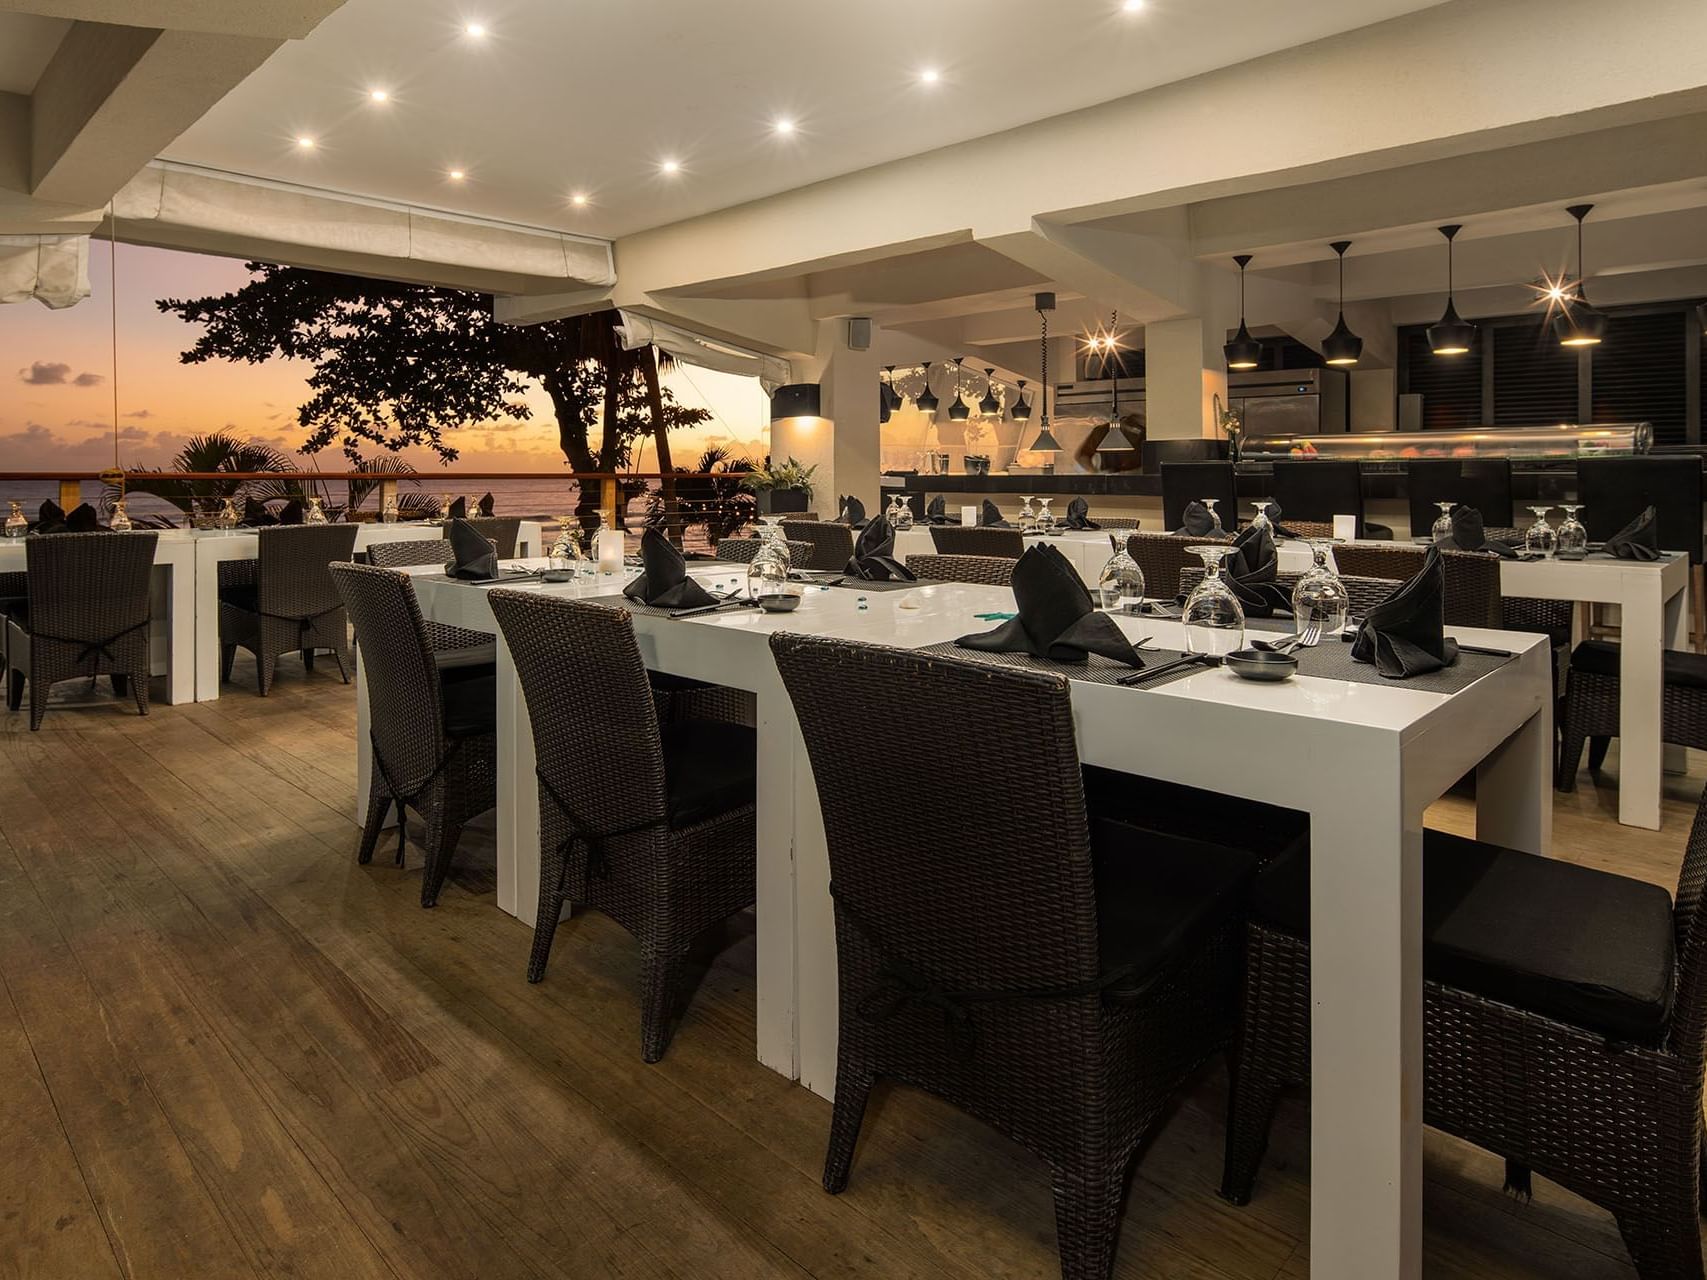 Dining area in Umi Restaurant at Sugar Bay Barbados